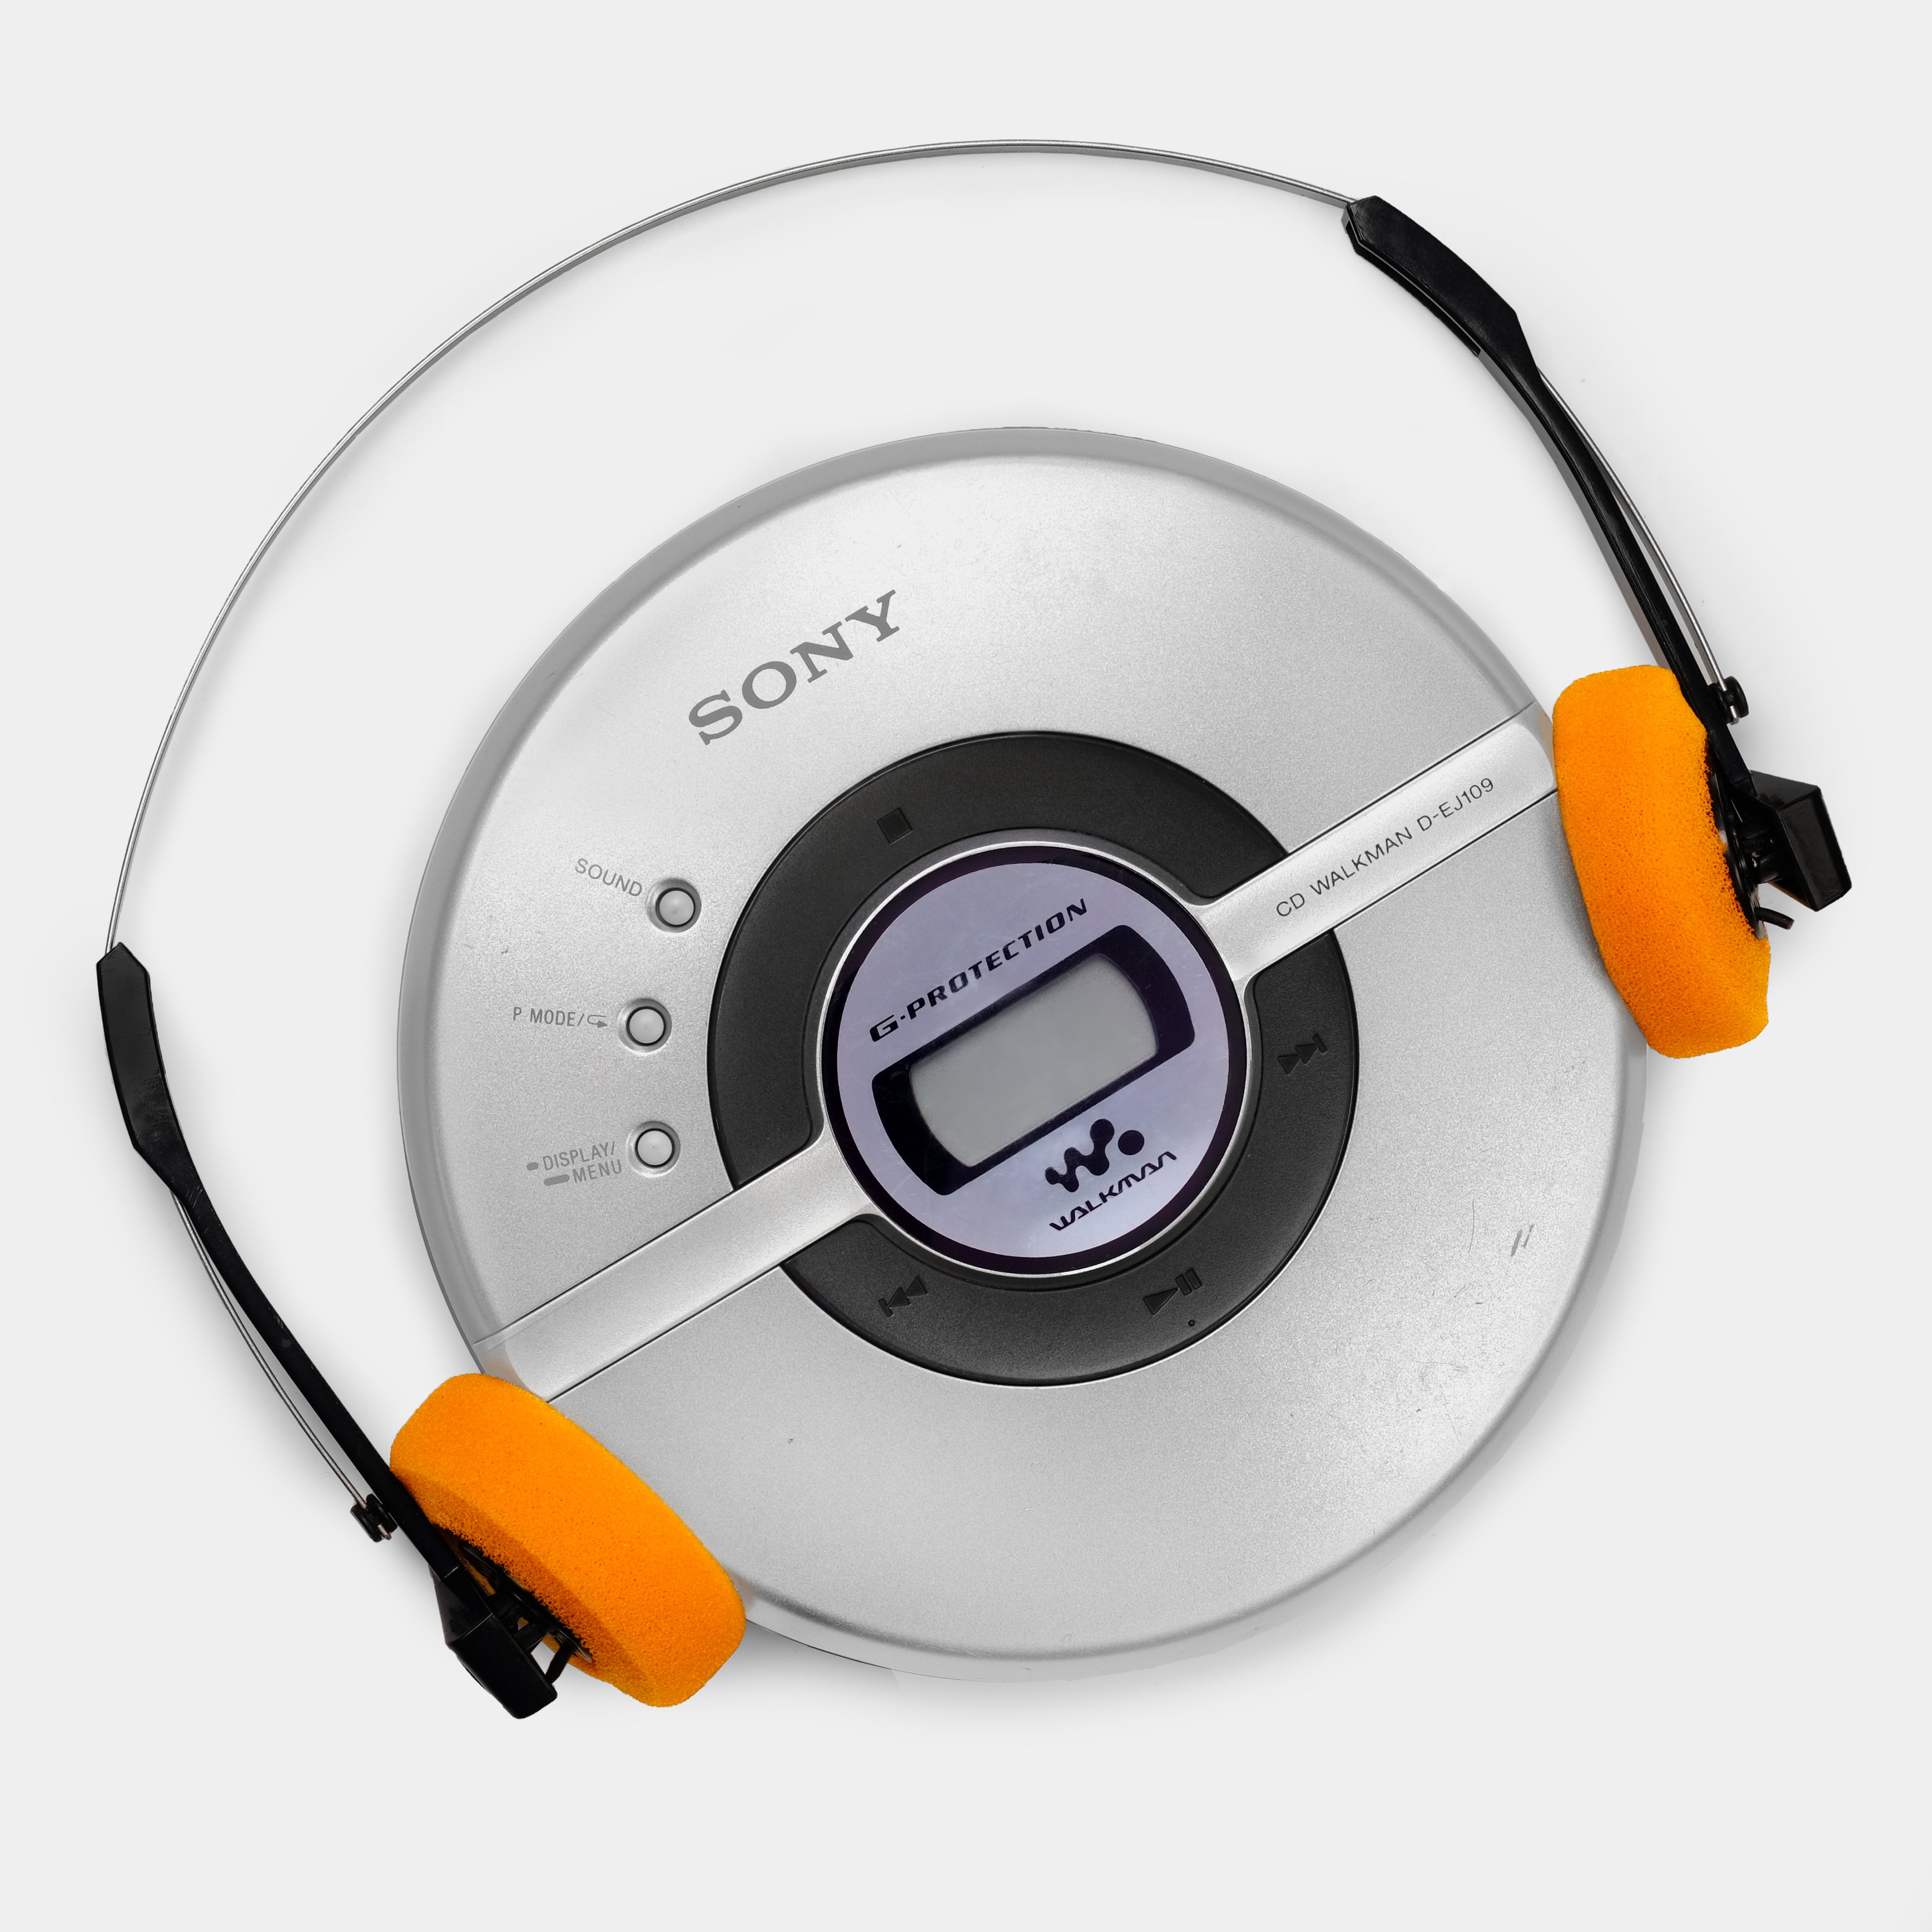 Sony D-EJ109 Portable CD Player